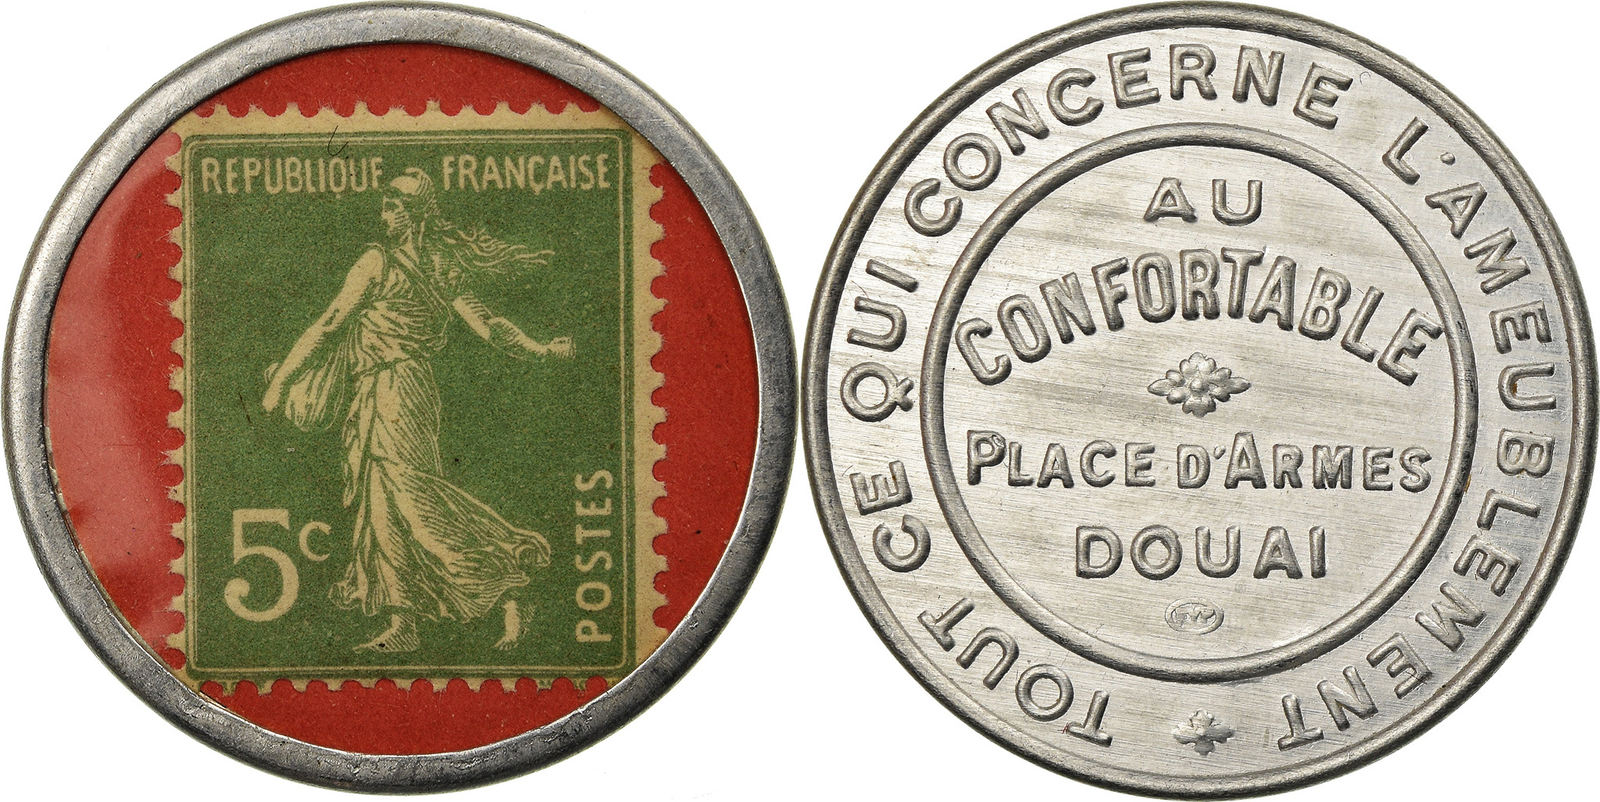 Монета monnaie de Paris 2019. 5 Центимер монета. Au монеты. 5 Fr в рублях. Ау монеты